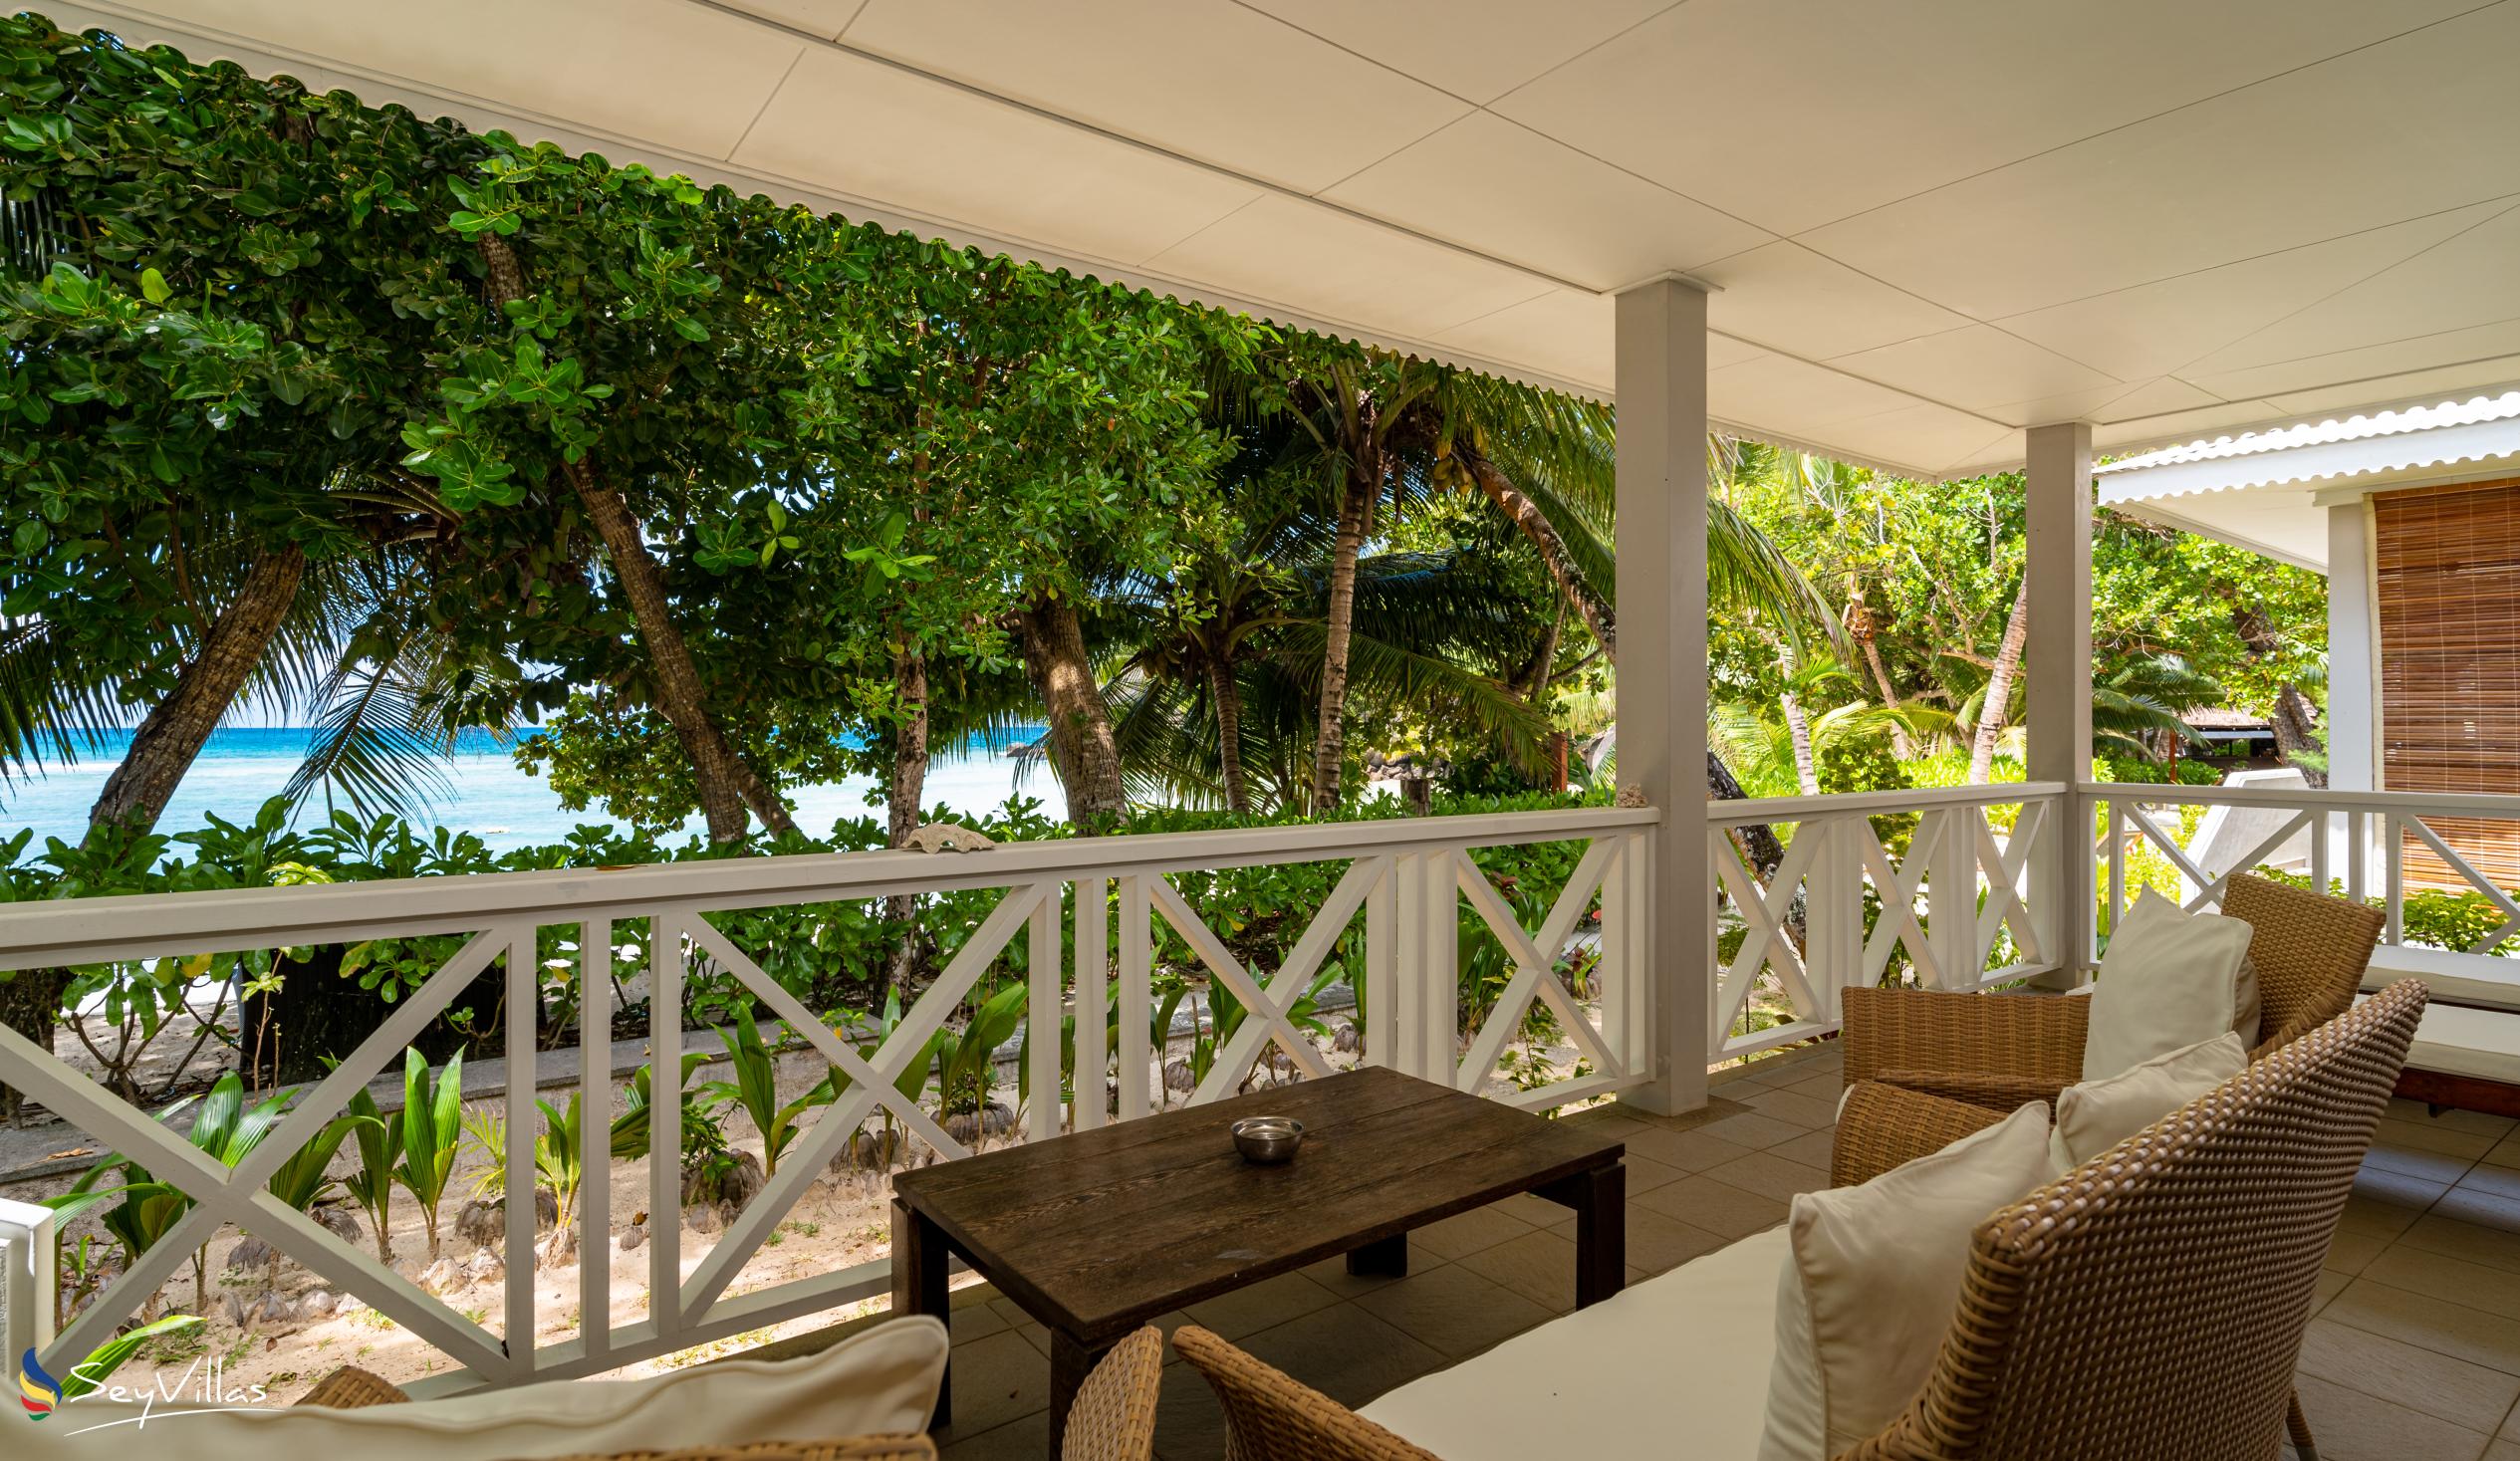 Photo 135: La Belle Tortue - Presidential Villa - Silhouette Island (Seychelles)